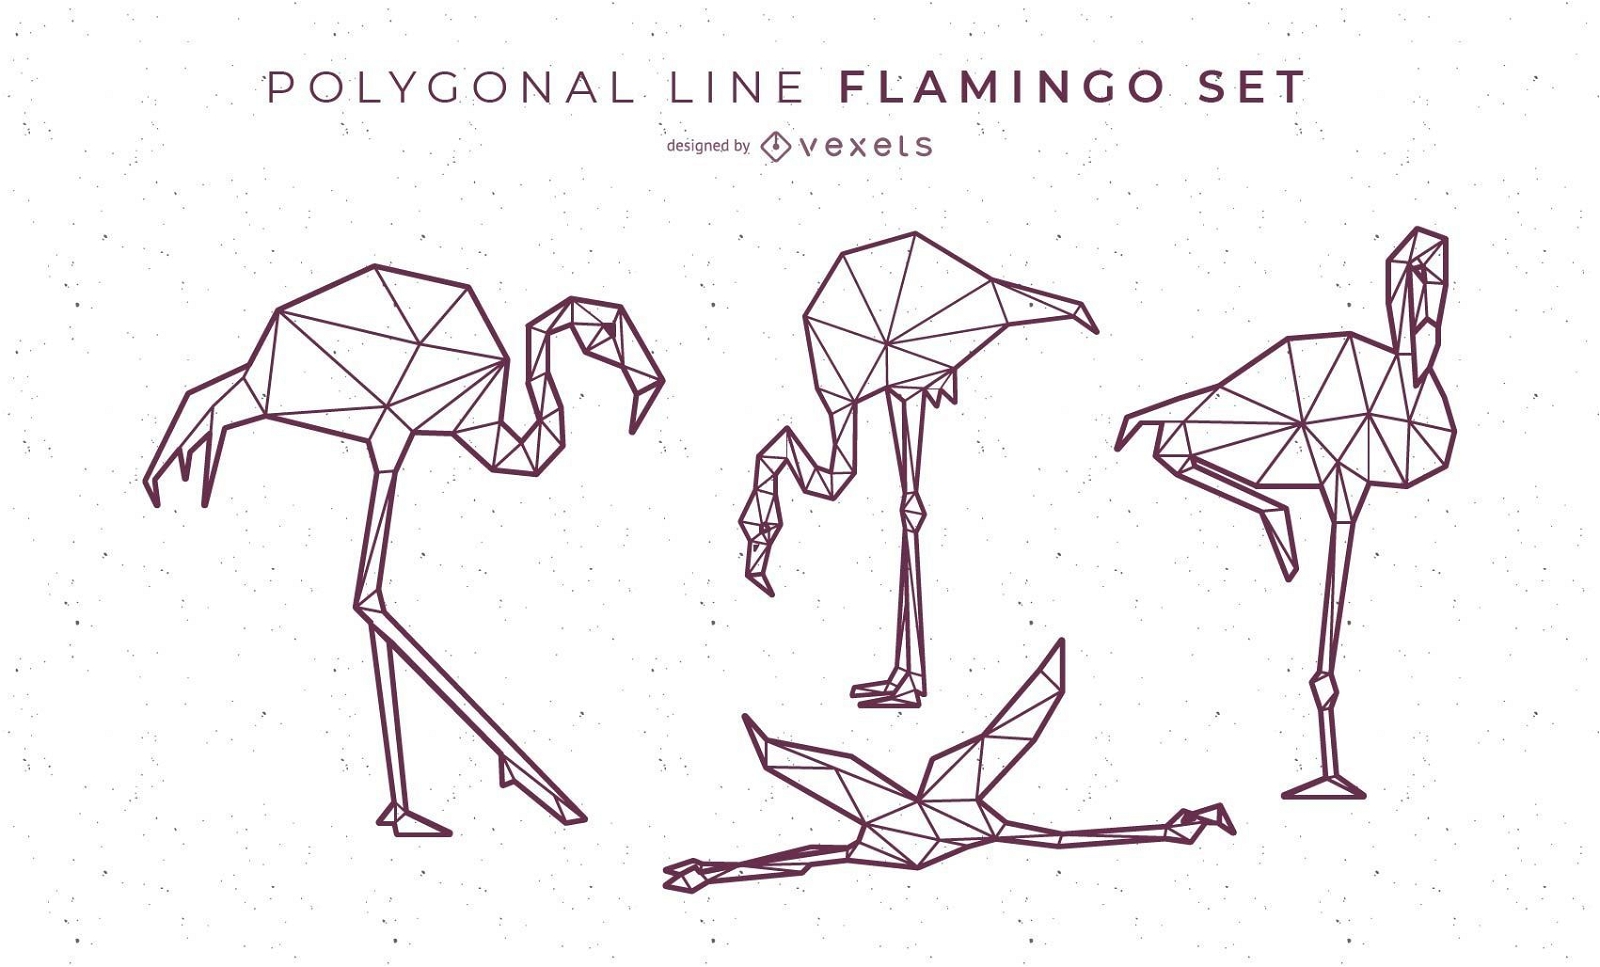 Flamingo-Design der polygonalen Linie